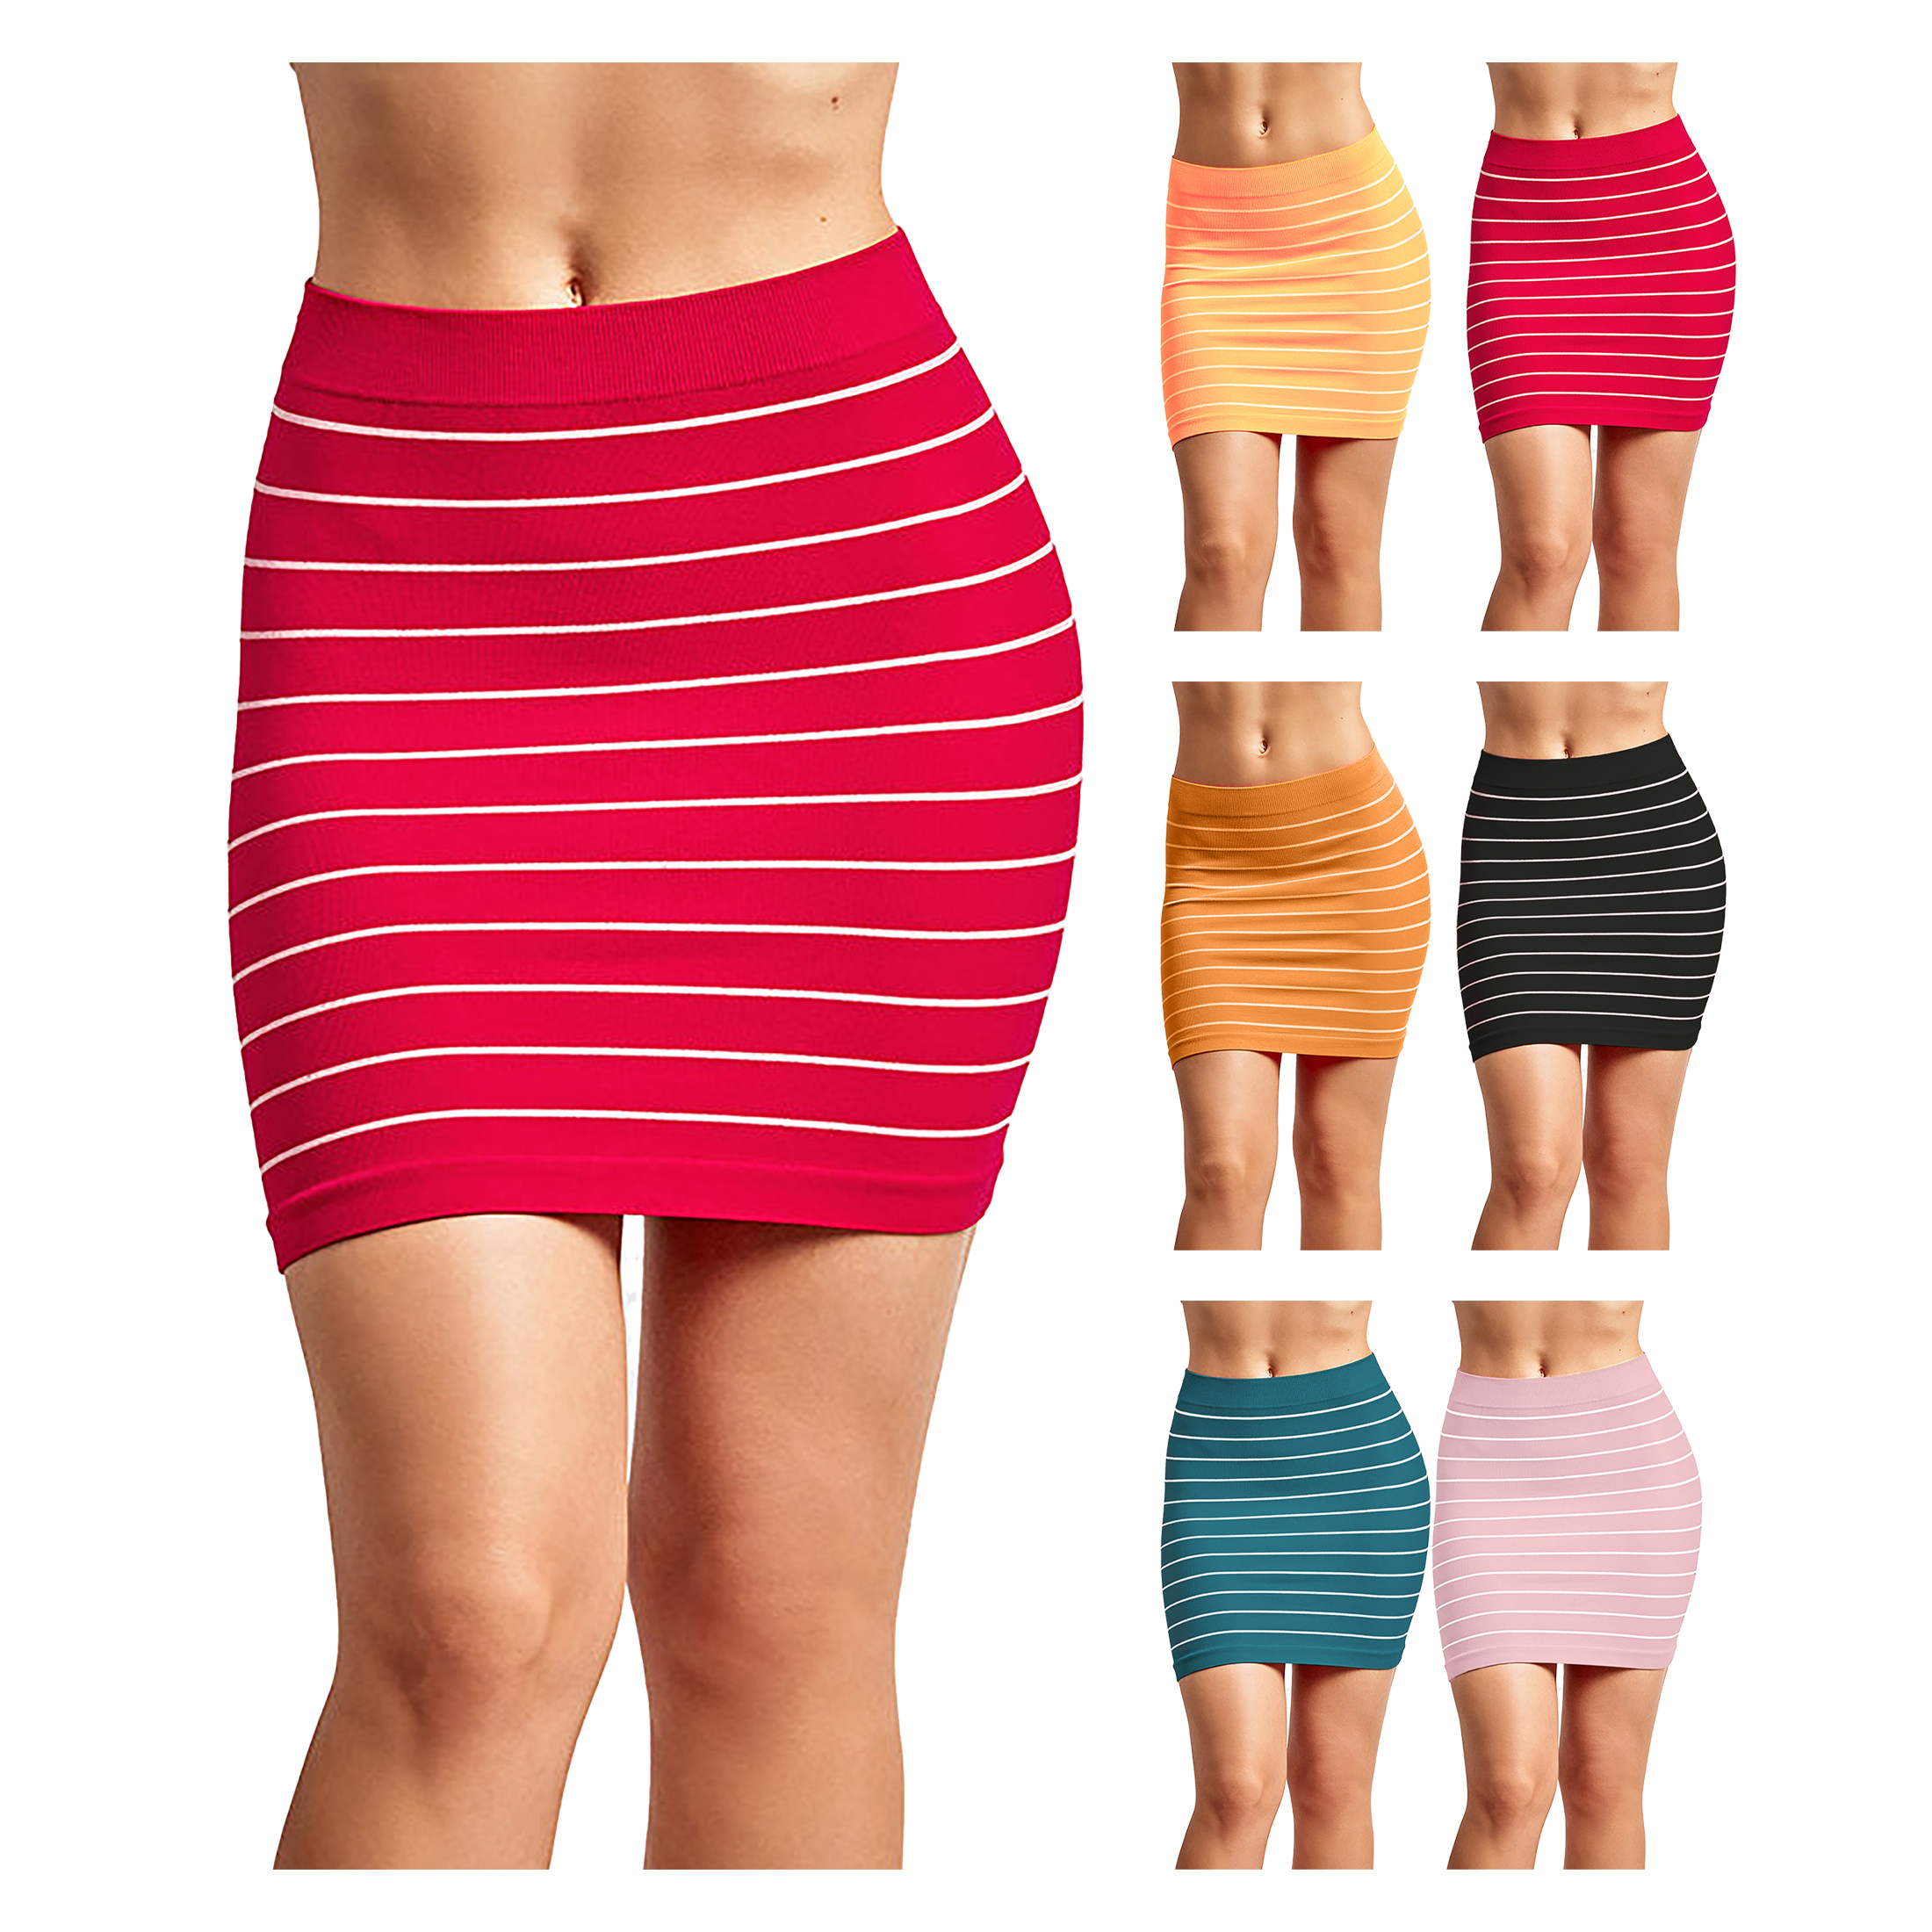 3-Pack: Women's Striped Seamless Microfiber Slim Nylon Pull-On Closure Mini Skirts - X-Large